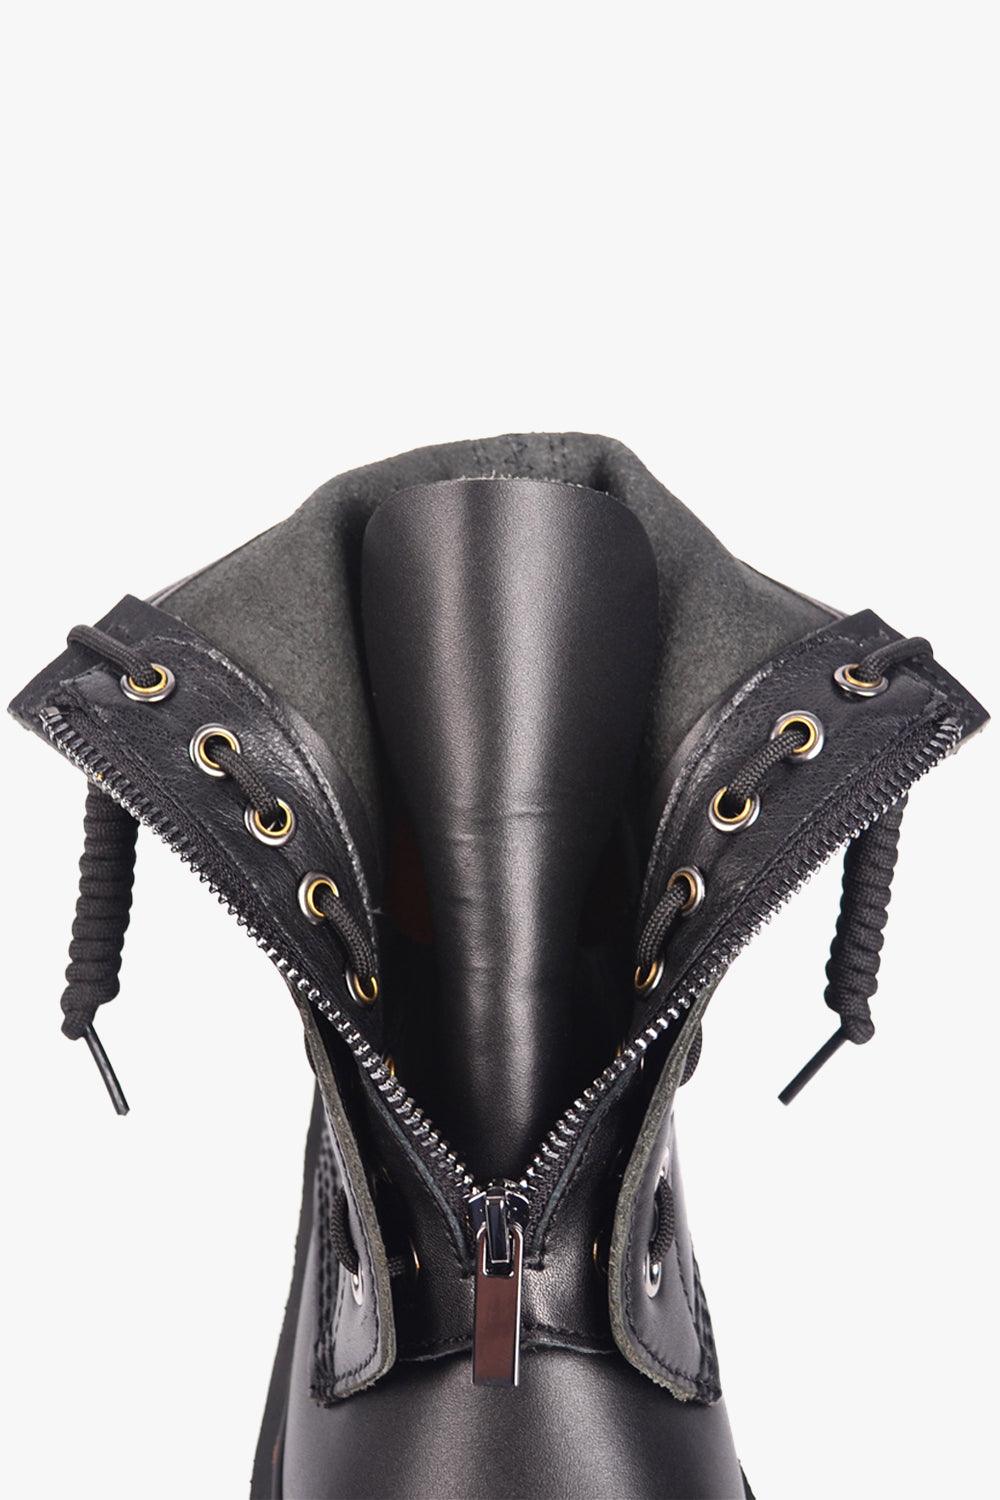 Martens Boots Lace Replacer Zipper 8 Holes - Aesthetic Clothes Shop